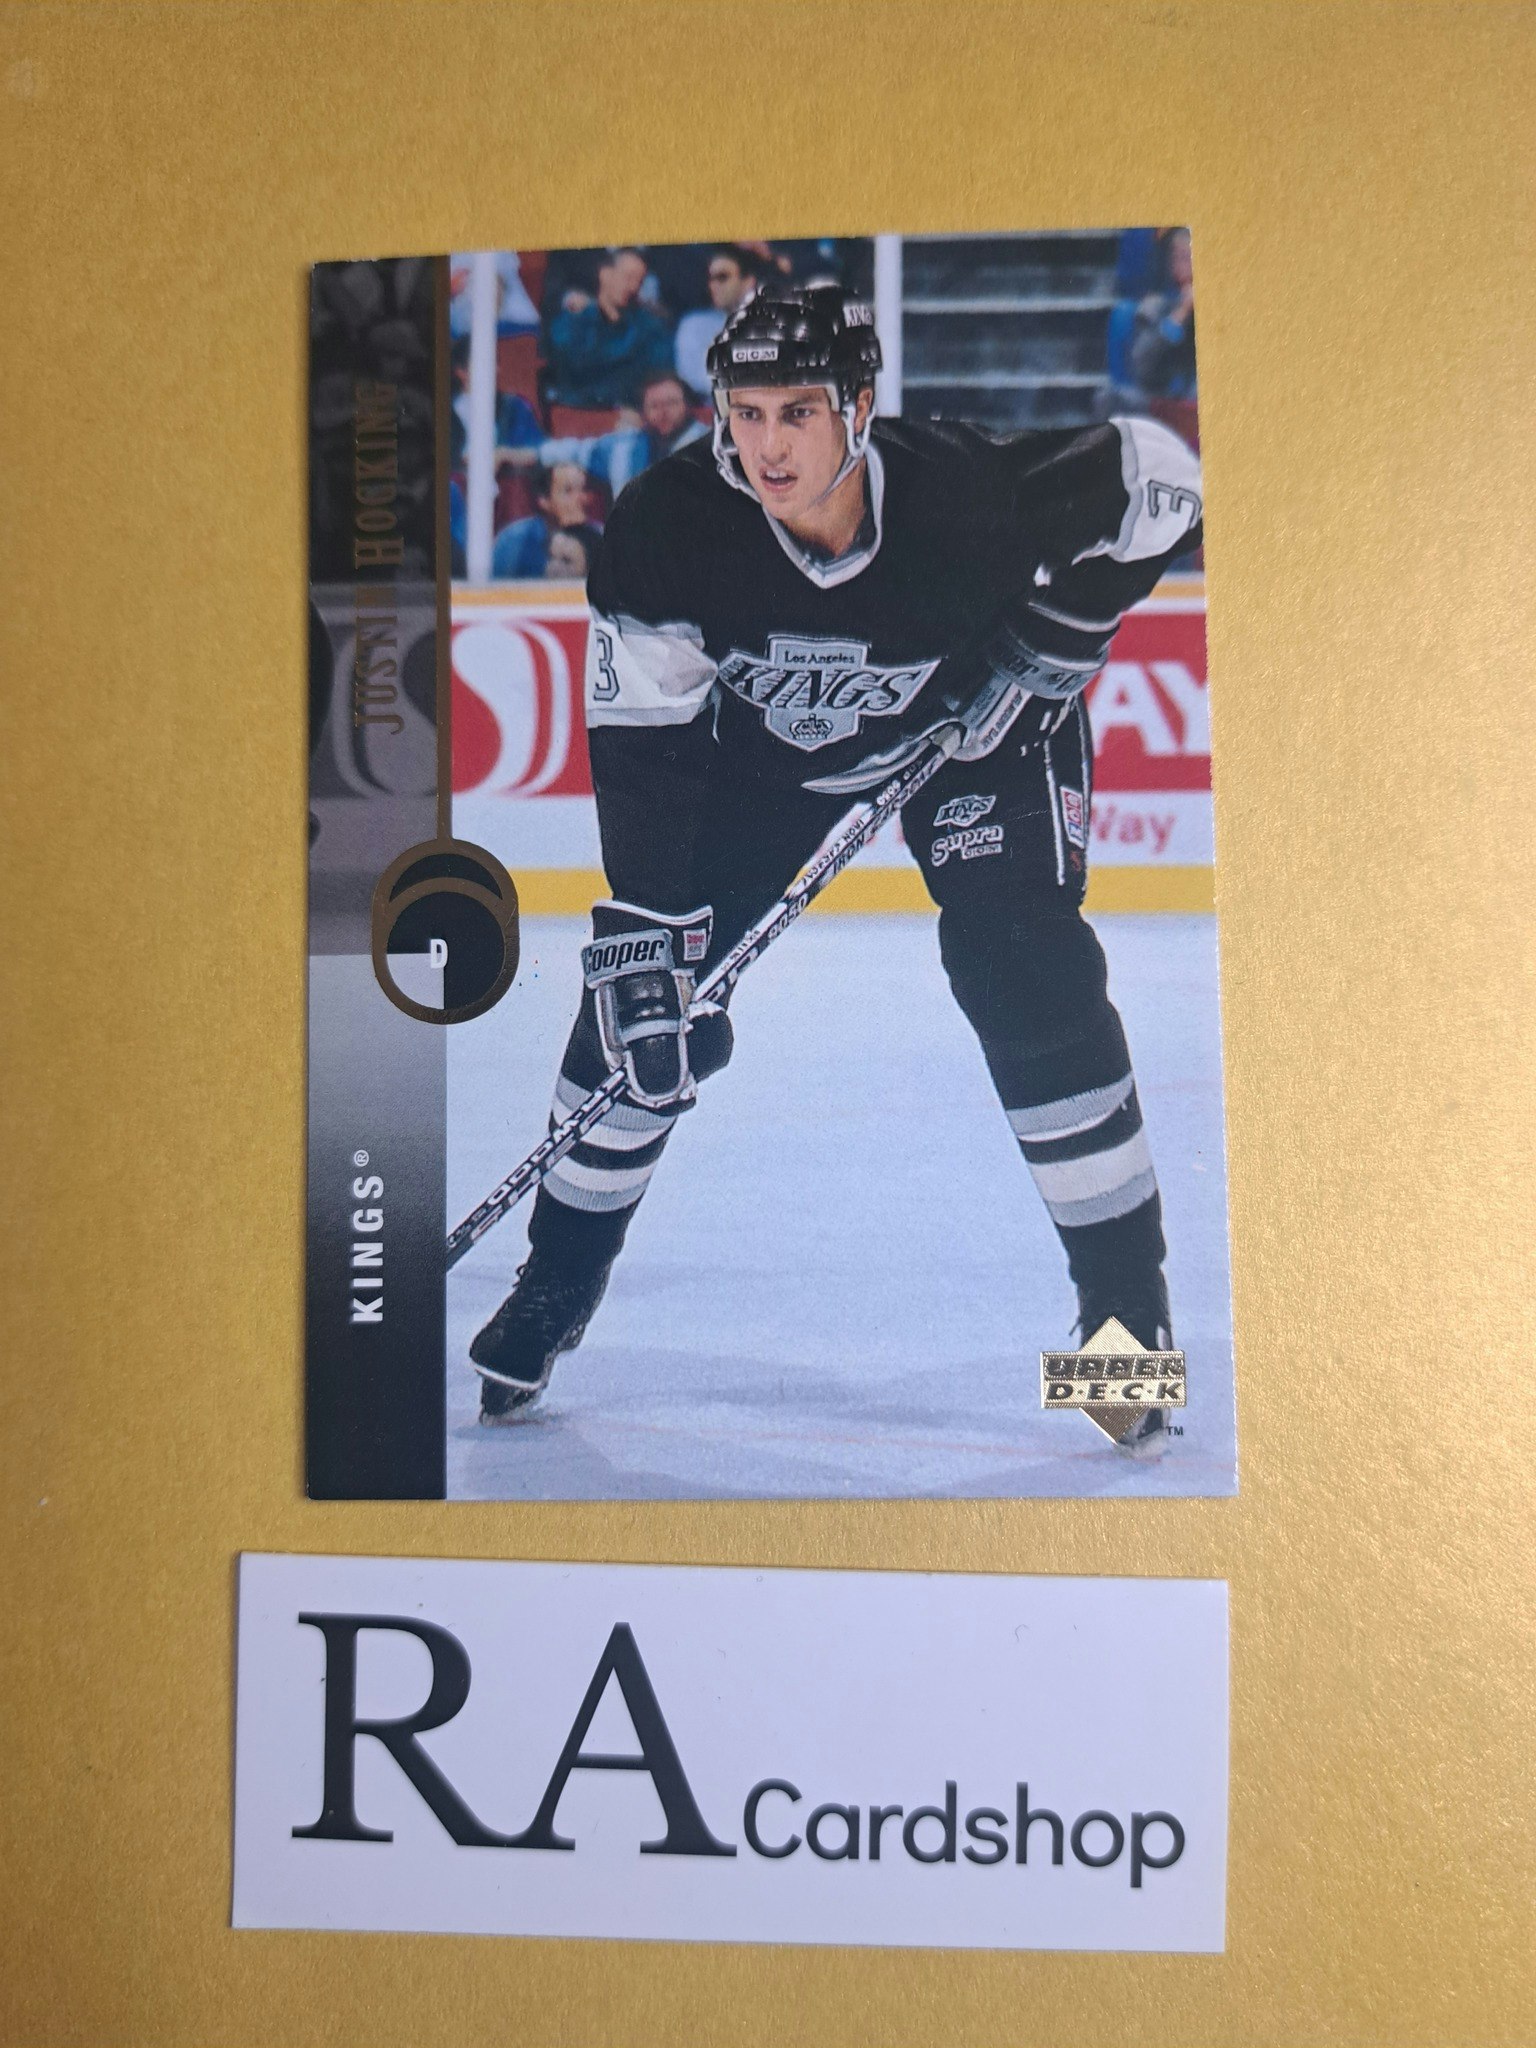 Justing Hocking (1) 94-95 Upper Deck #210 NHL Hockey